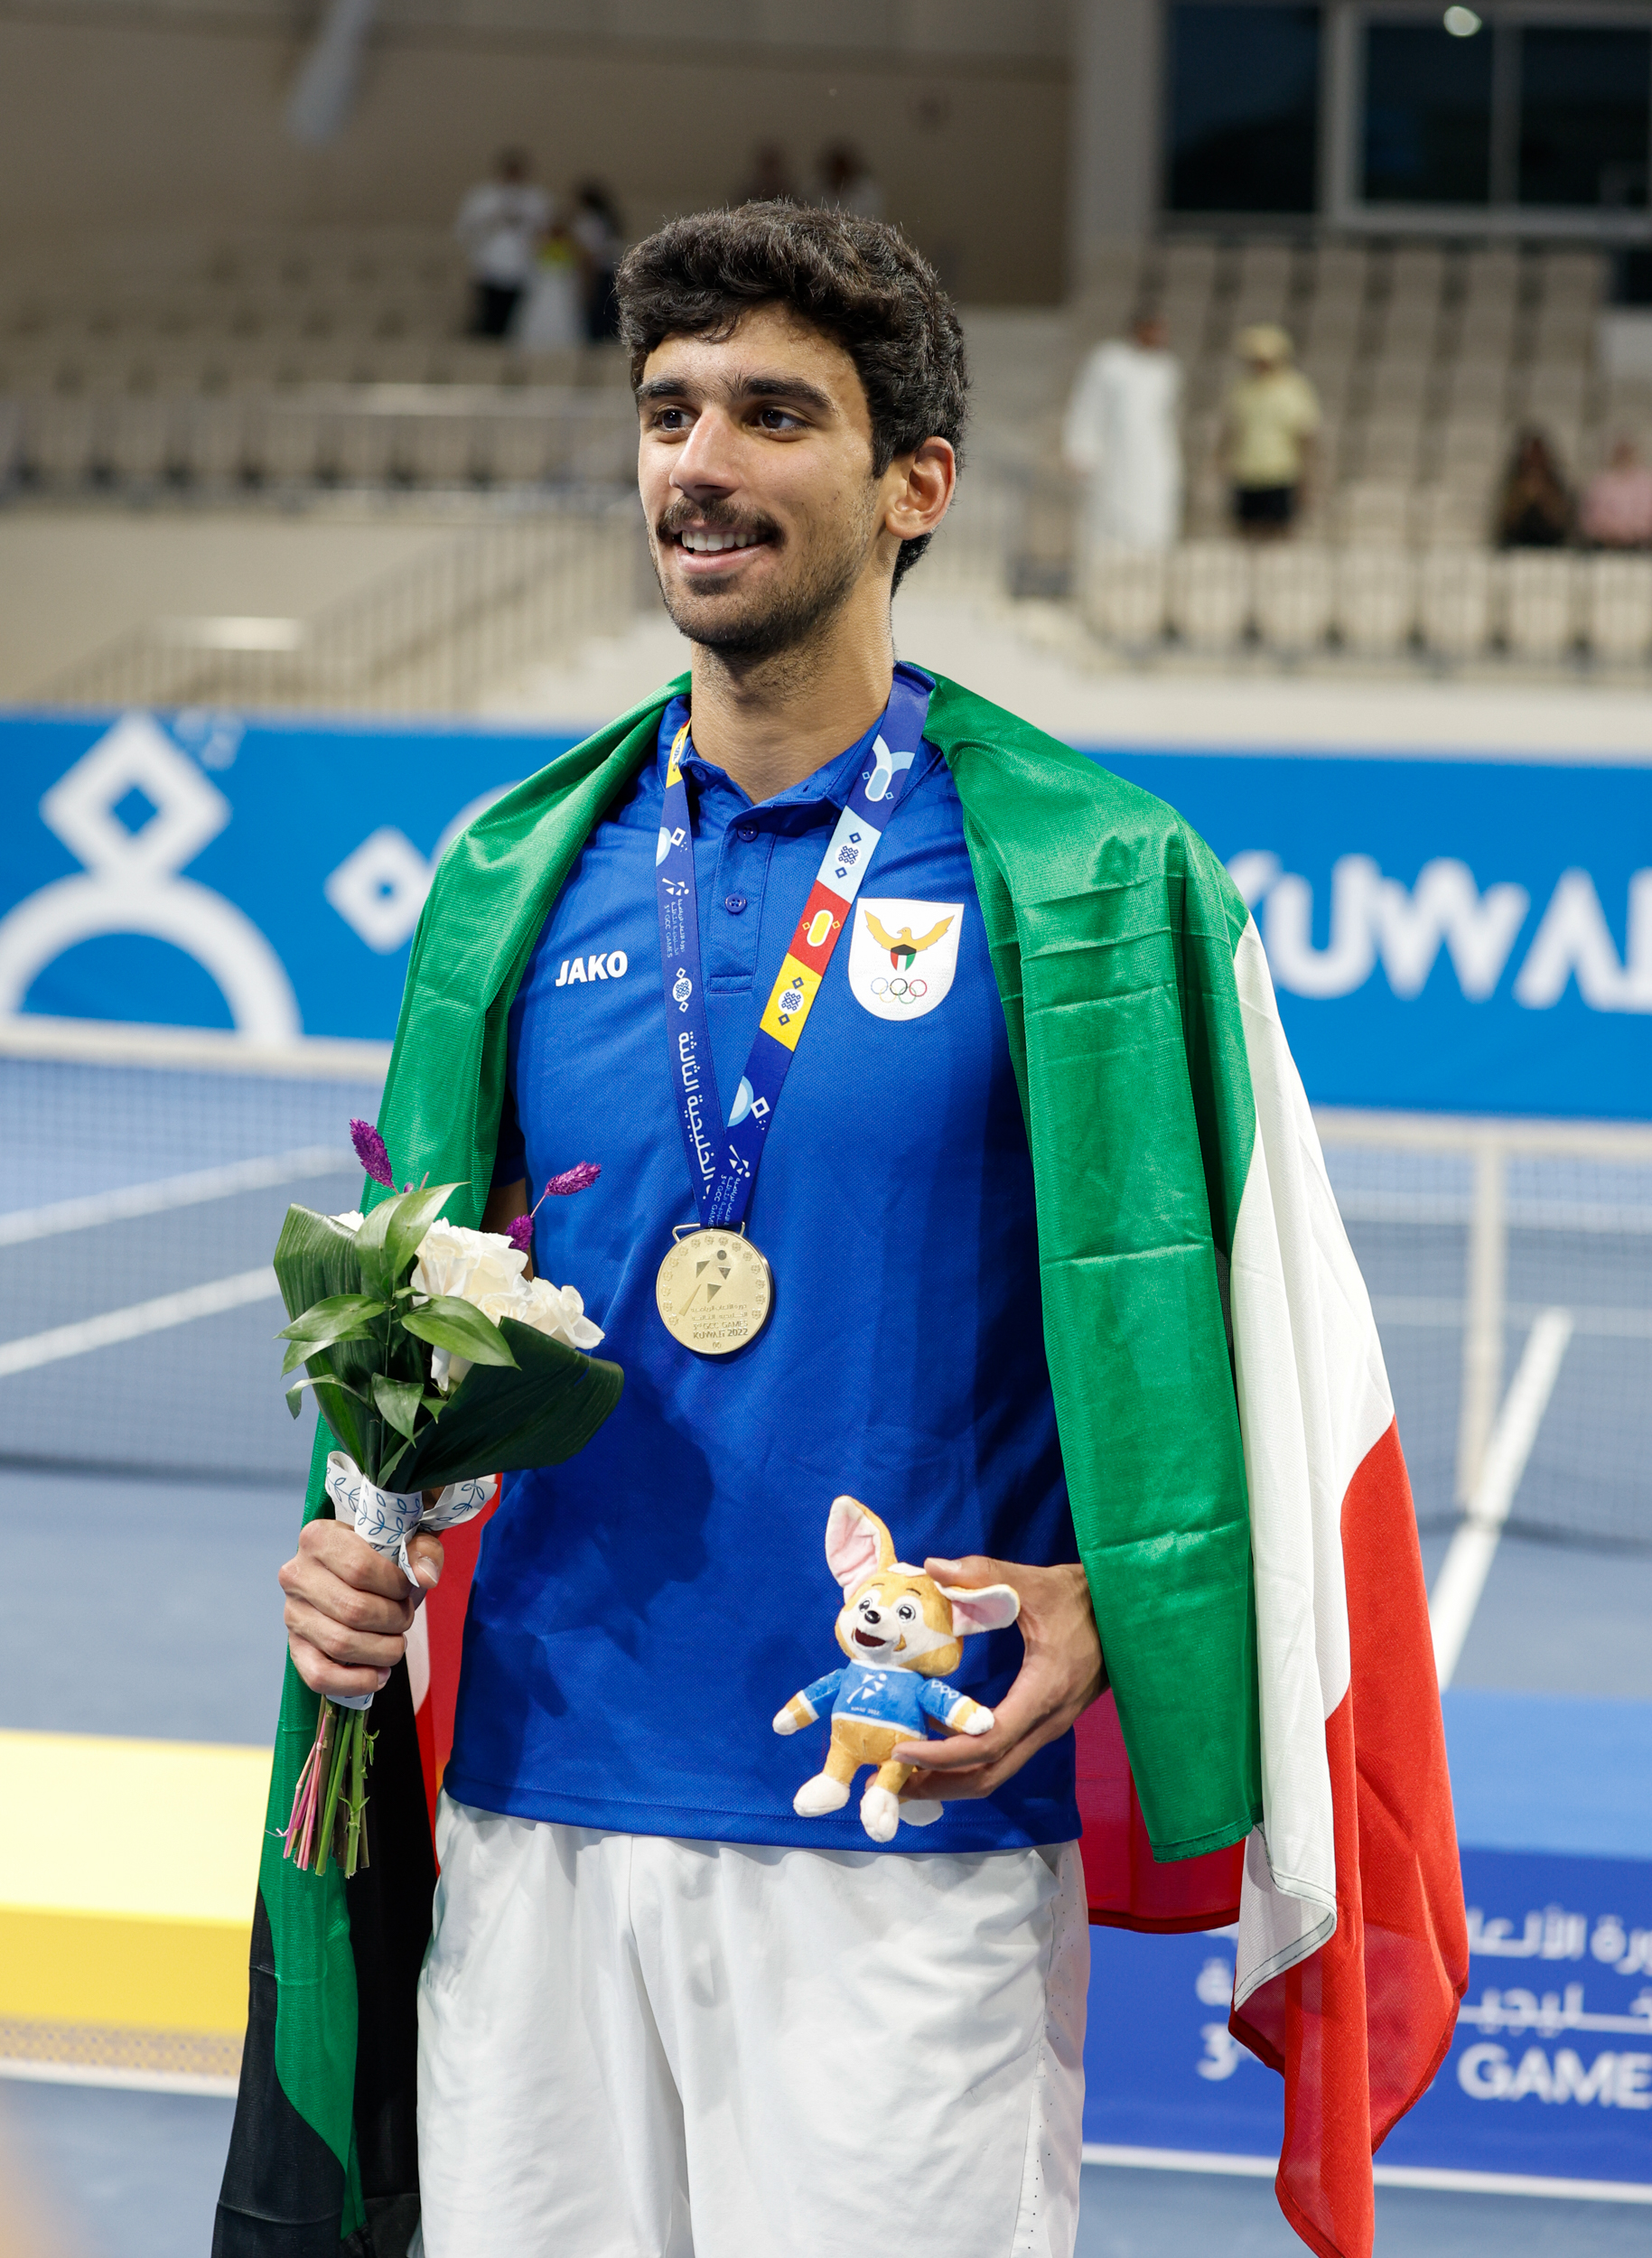 Qabazard's victory get Kuwait another Gold